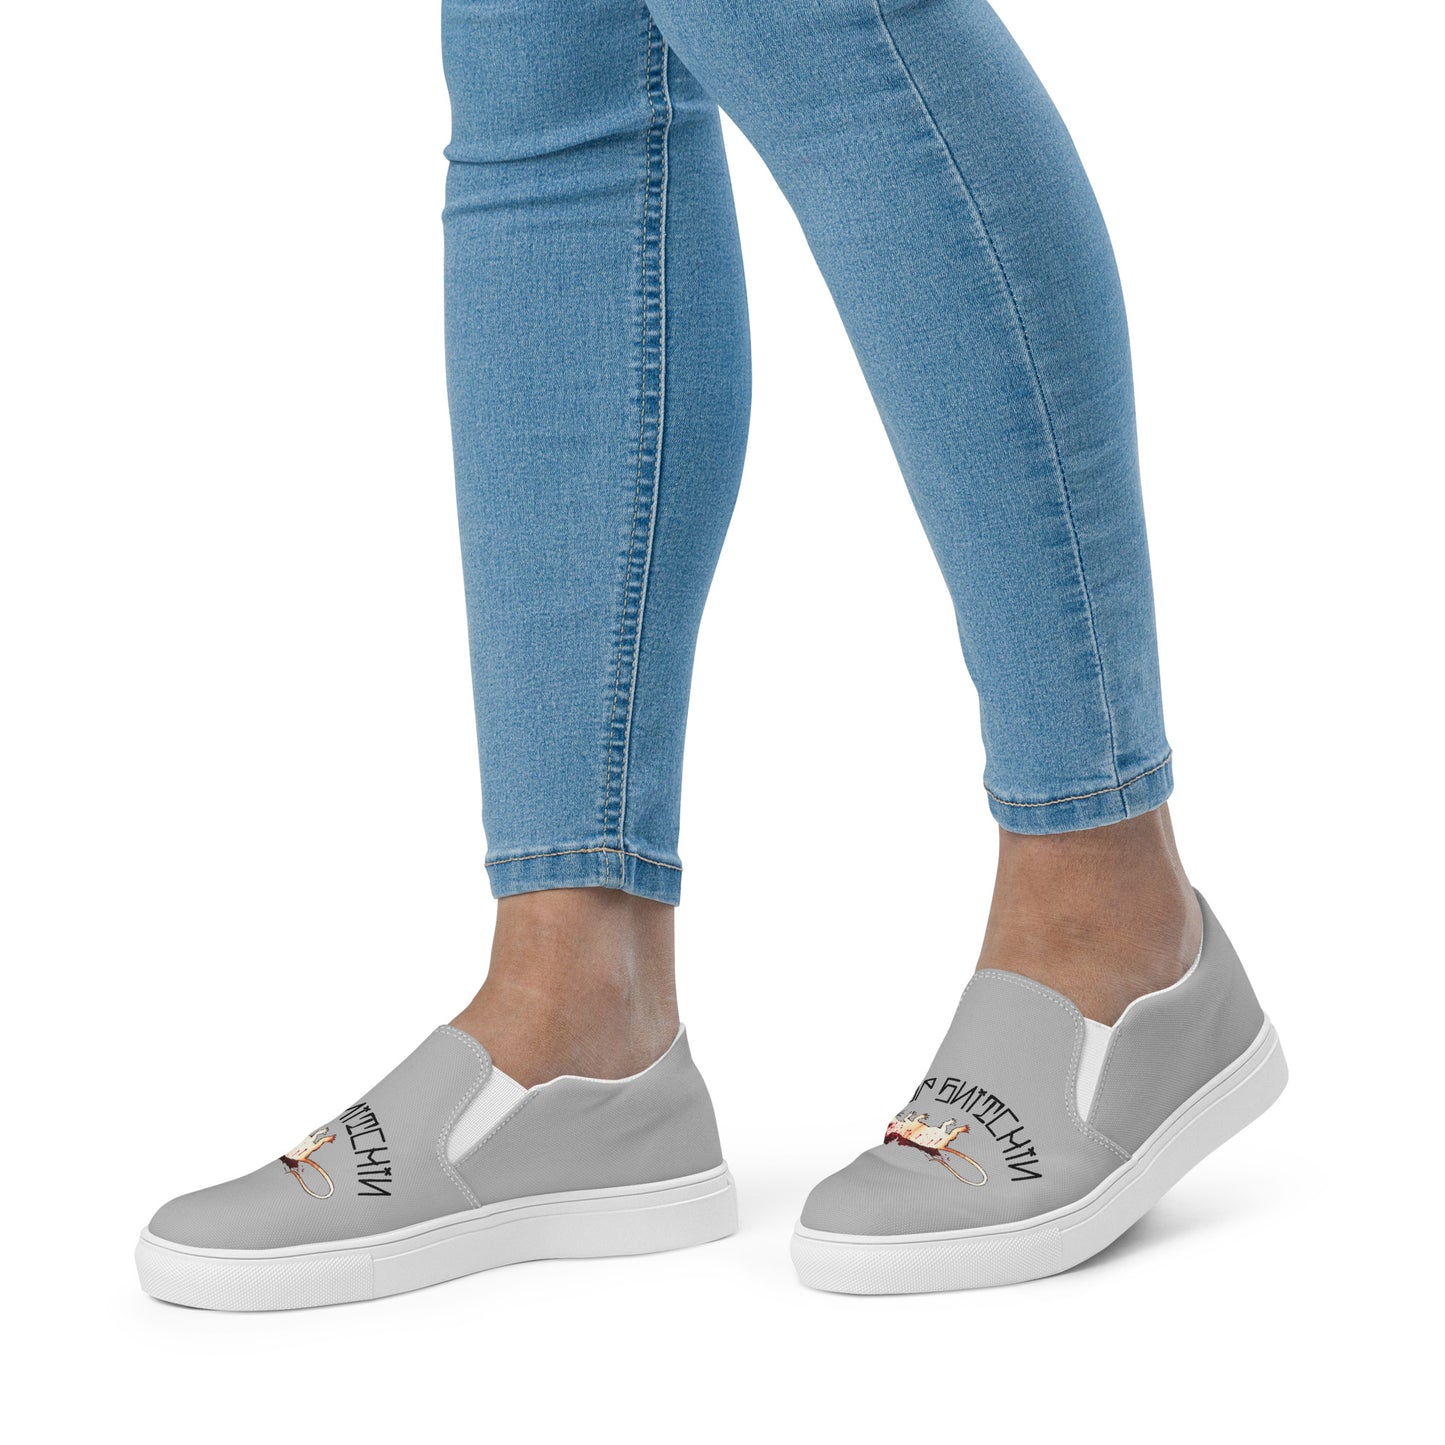 Women’s Fink Grey slip-on canvas shoes